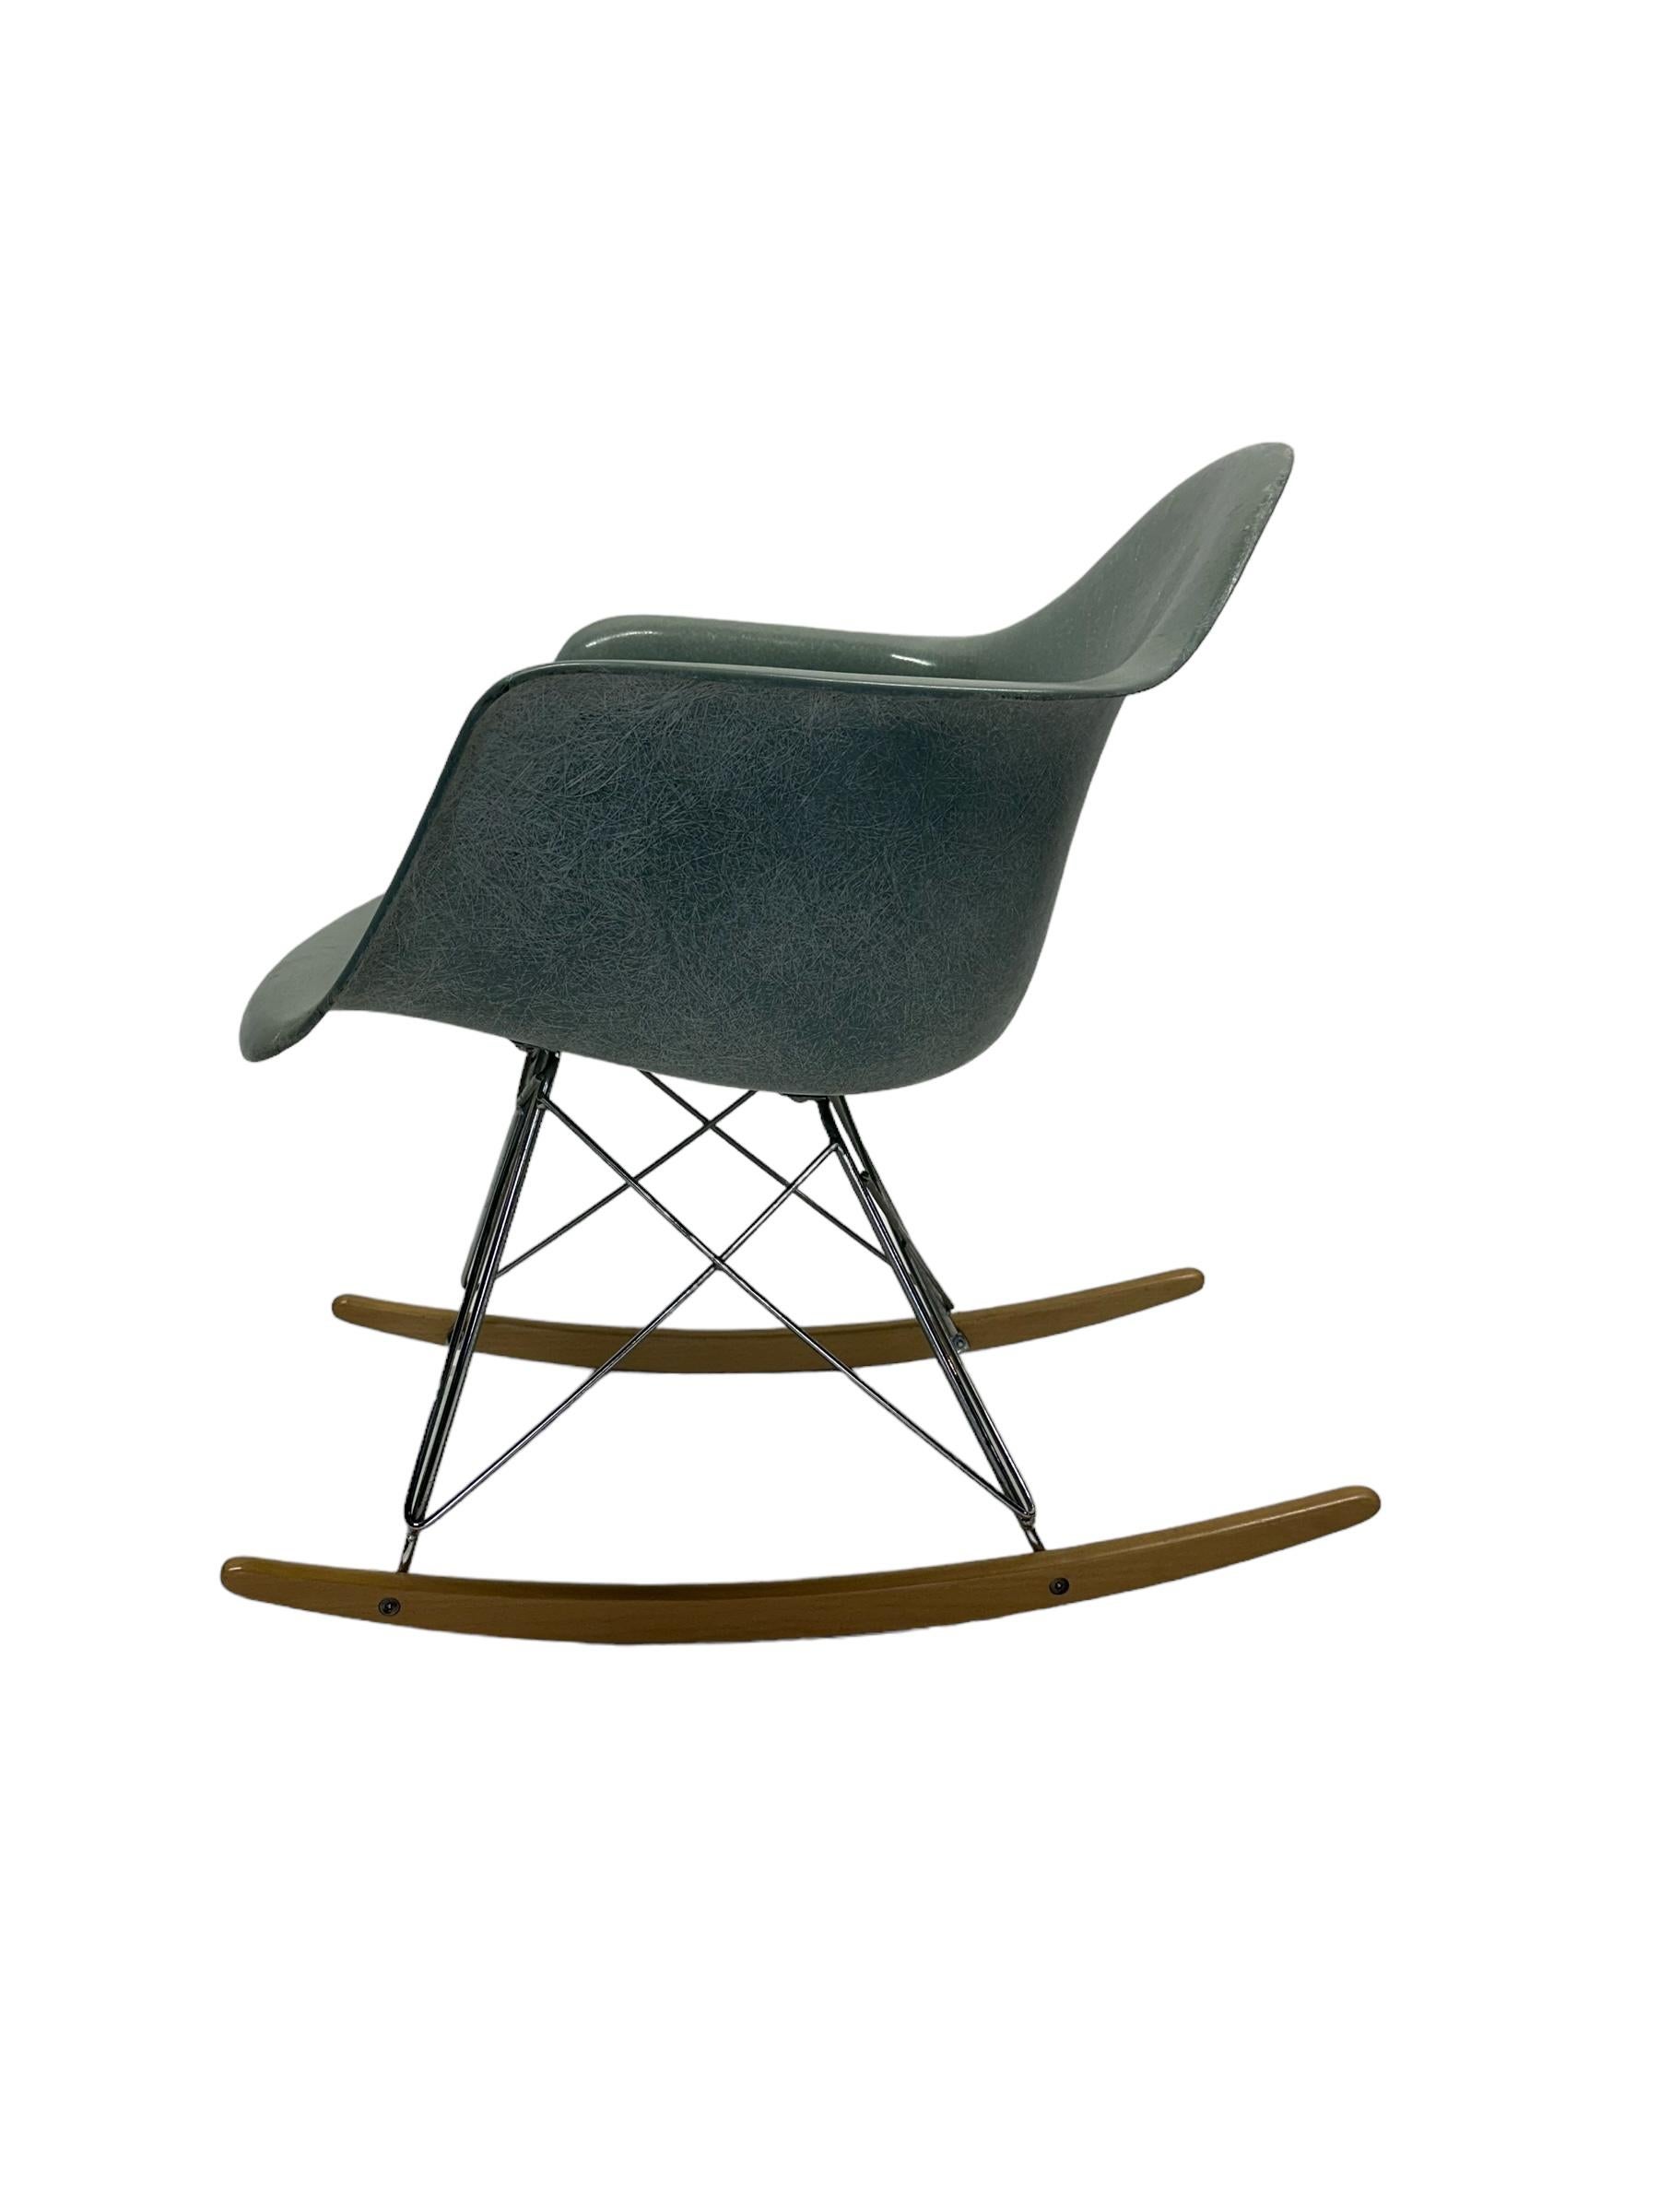 American Herman Miller Eames RAR Rocking Chair For Sale